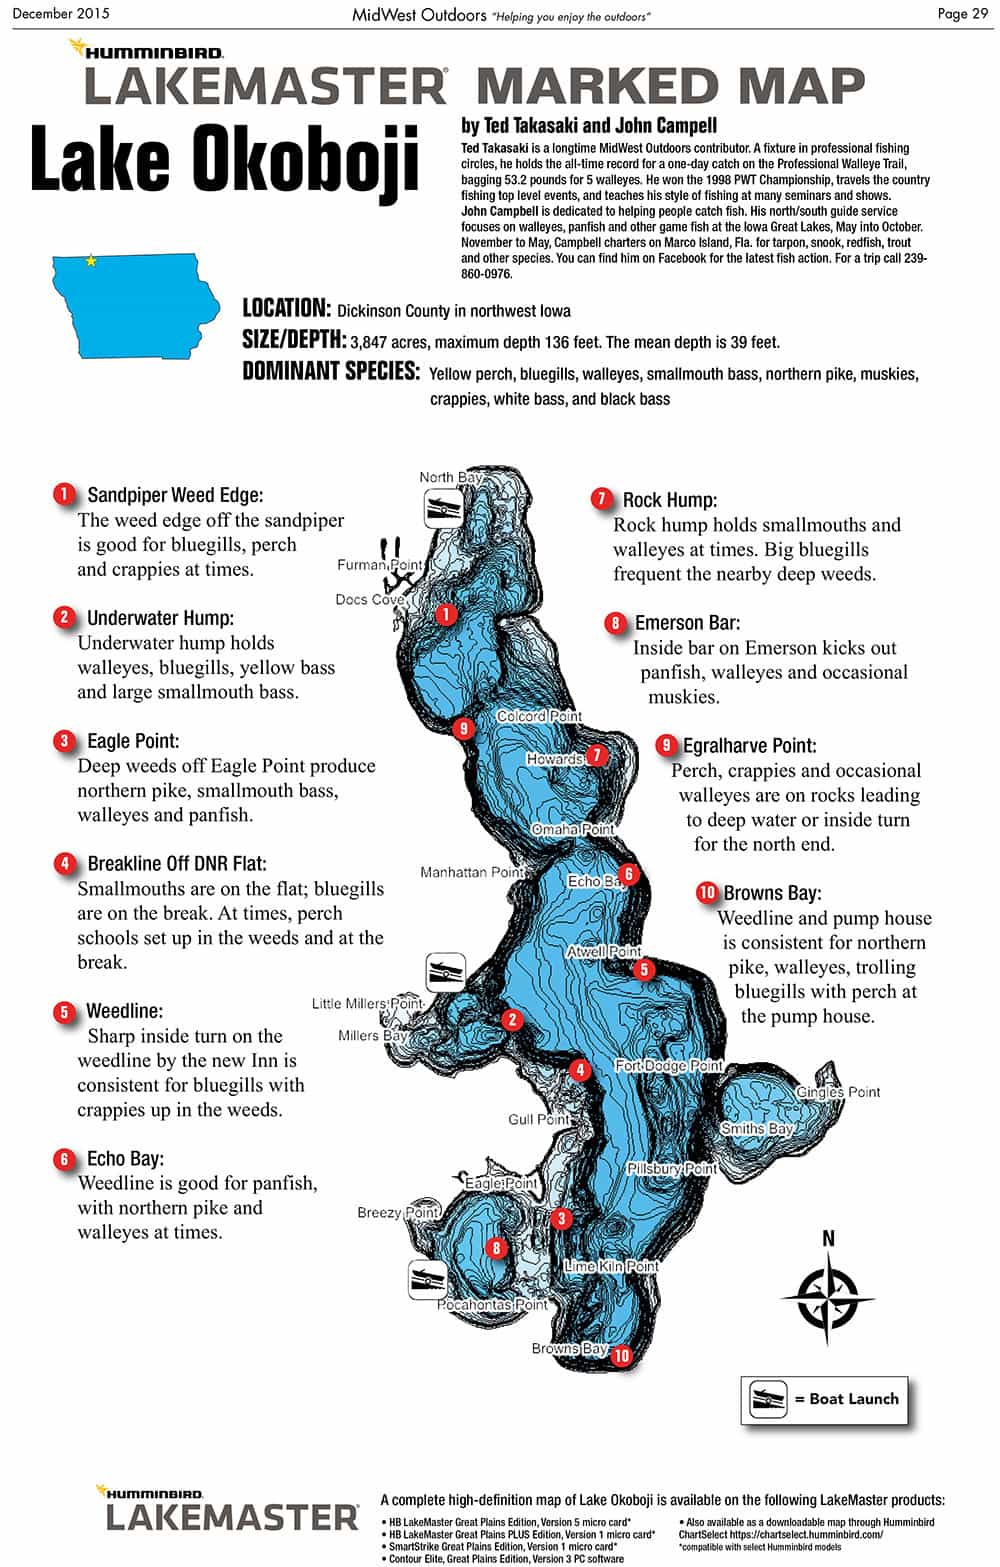 LakeMaster Marked Map: Lake Okoboji - MidWest Outdoors